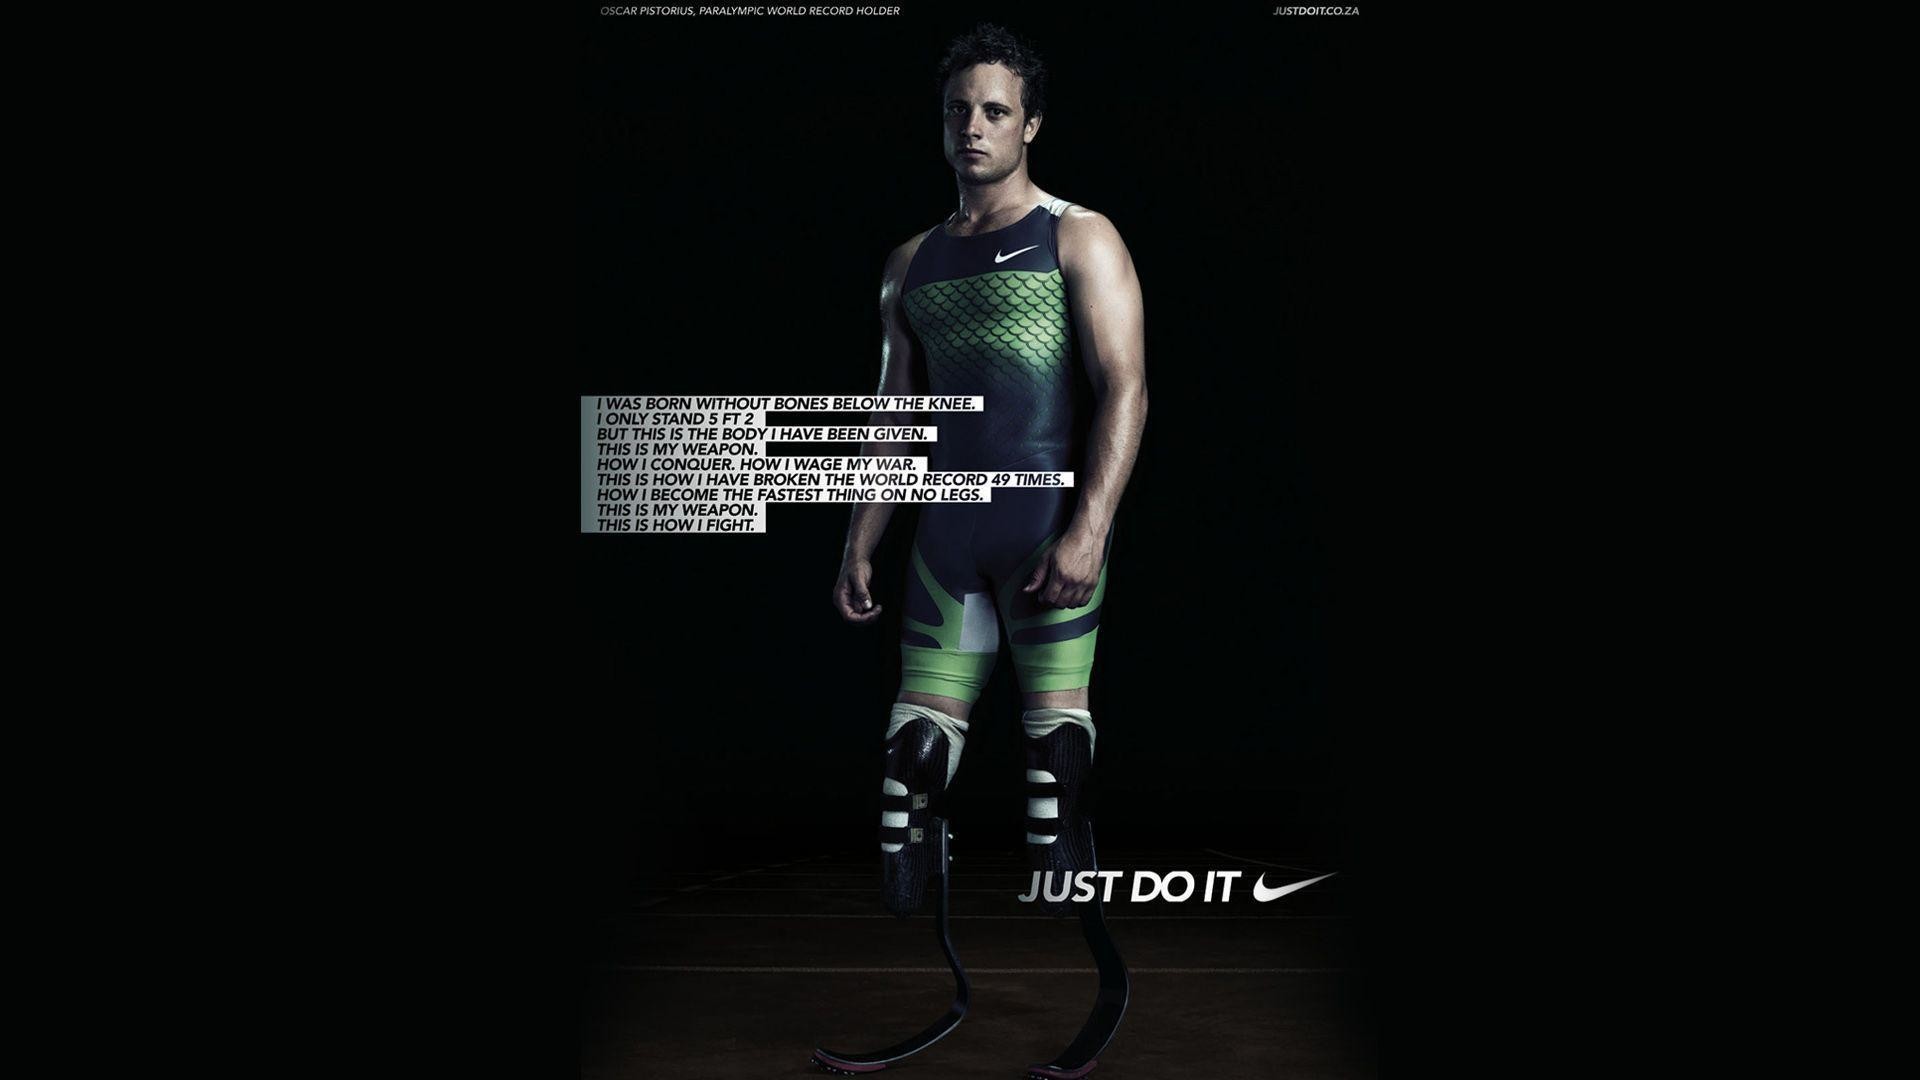 1920x1080 Nike motivation wallpaper - Motivation Blog - Motivation quotes